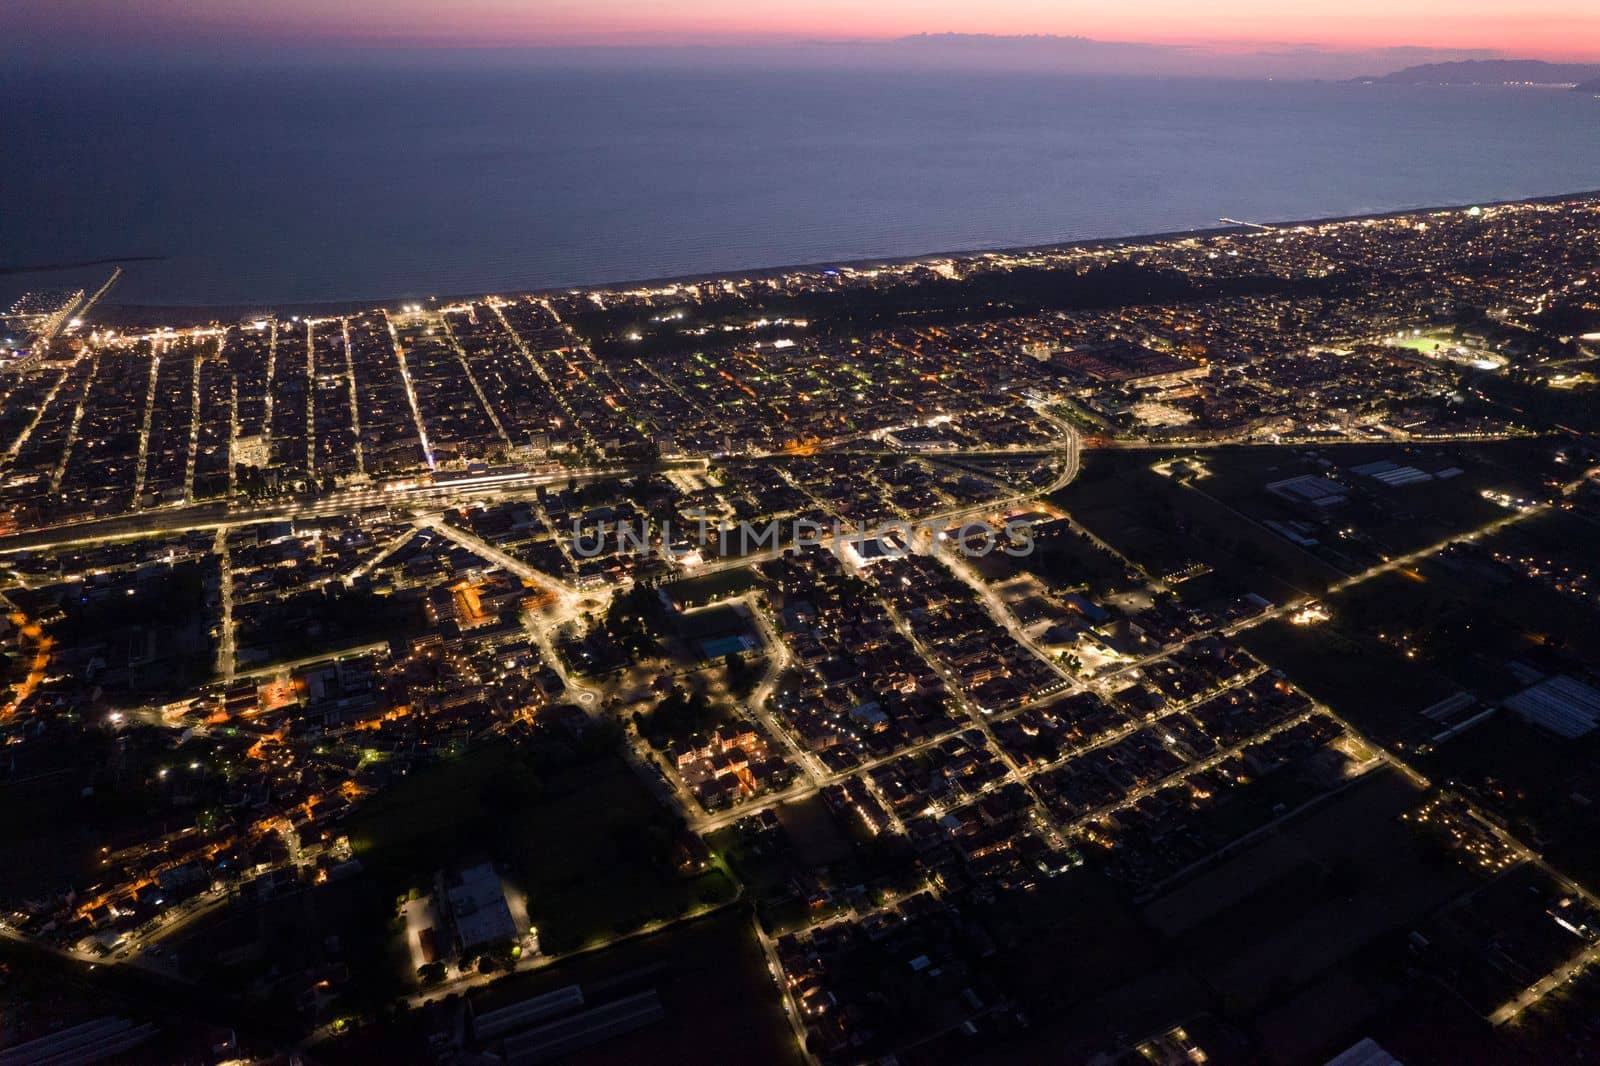 Aerial documentation of the city of Viareggio seen at night 